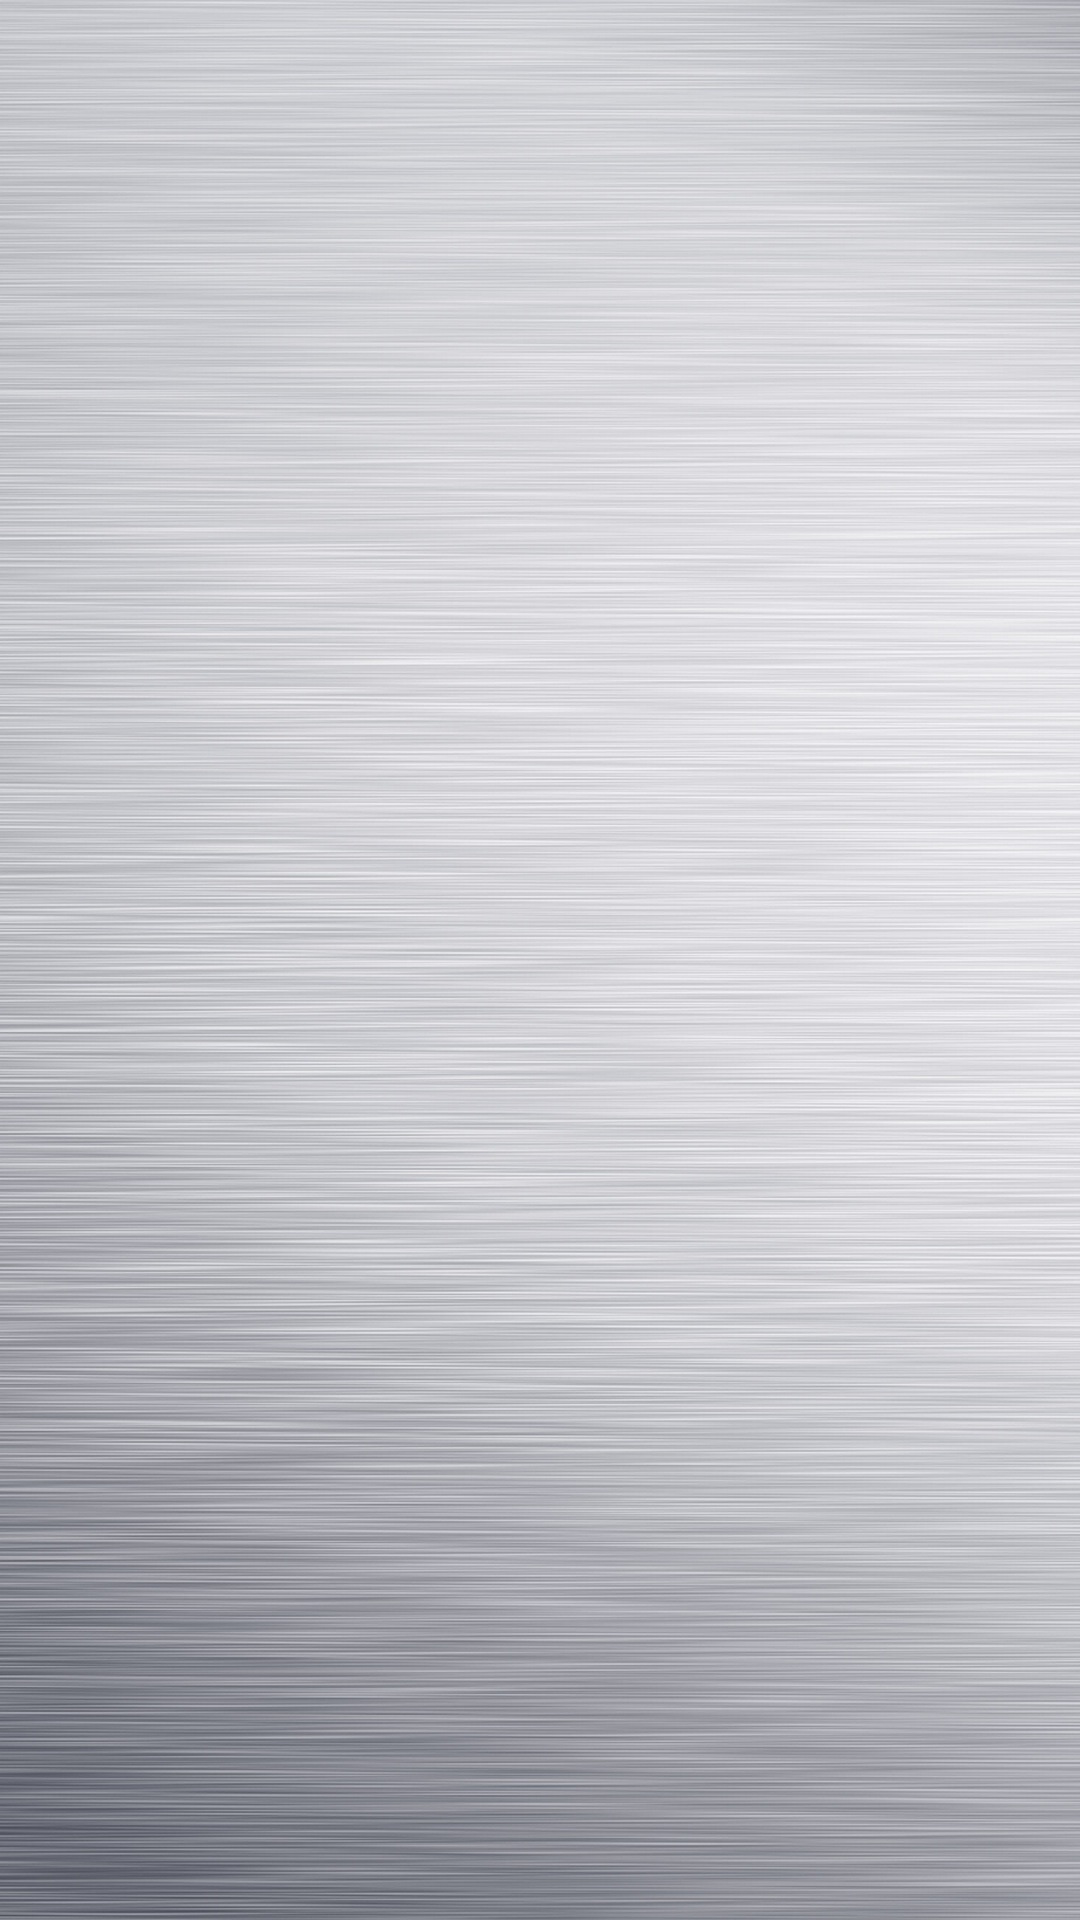 Horizontal Brushed Metal Surface Android Wallpaper